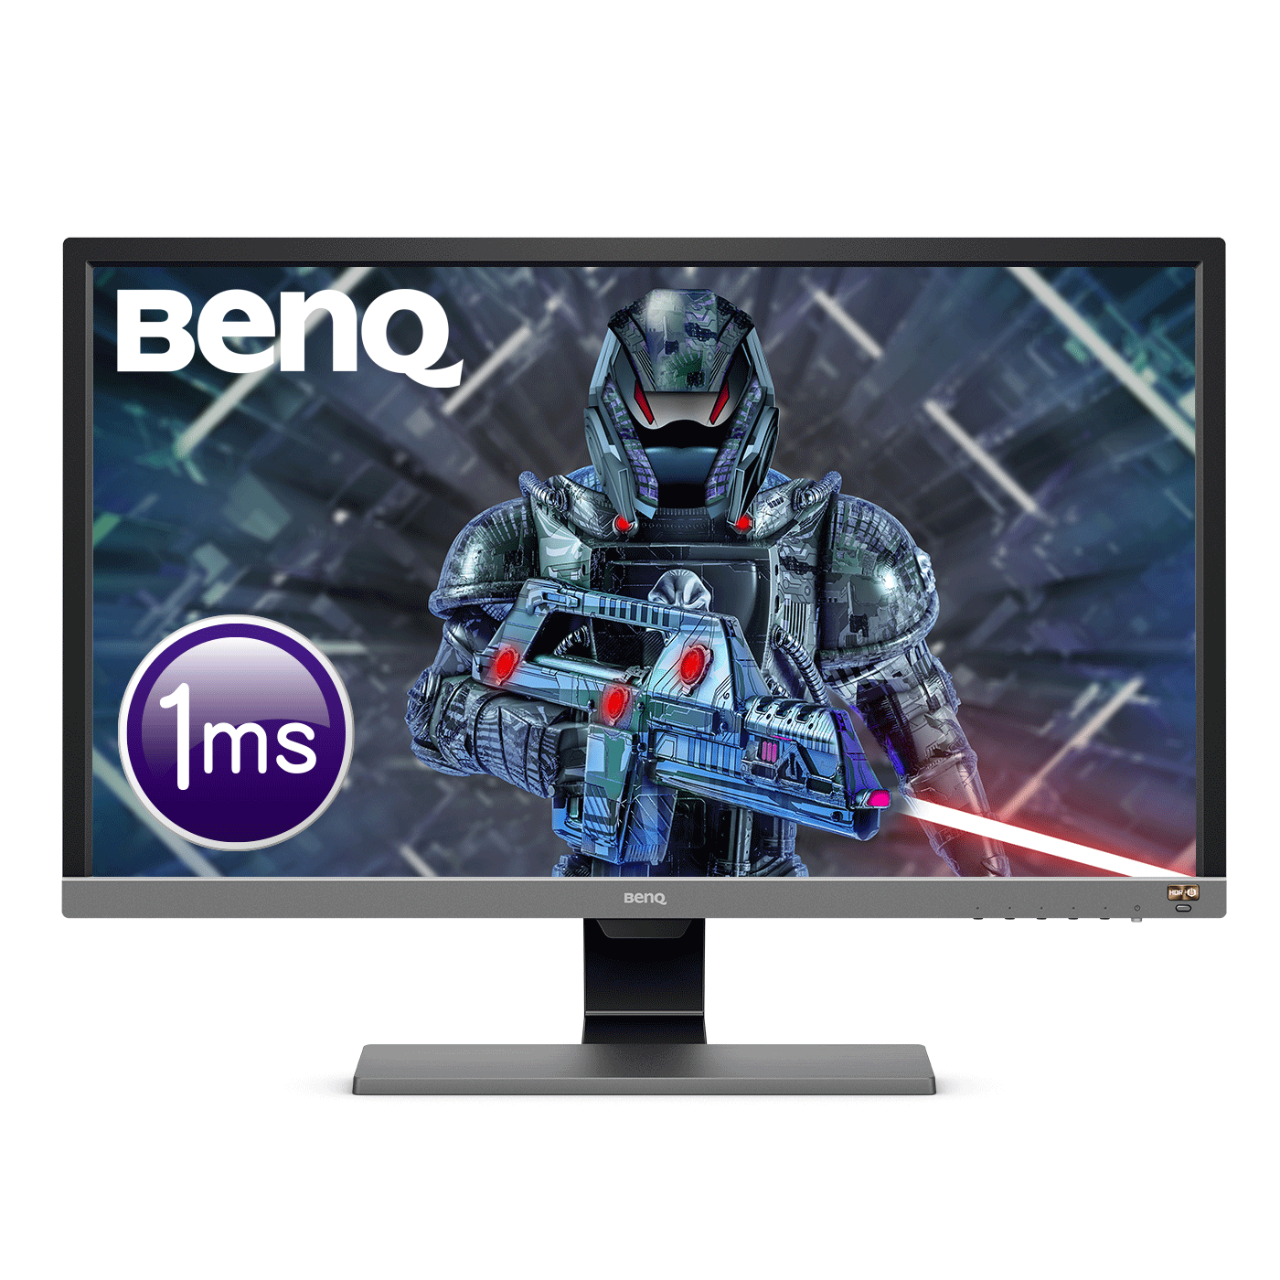 This is BenQ 4K UHD gaming monitor EL2870U.